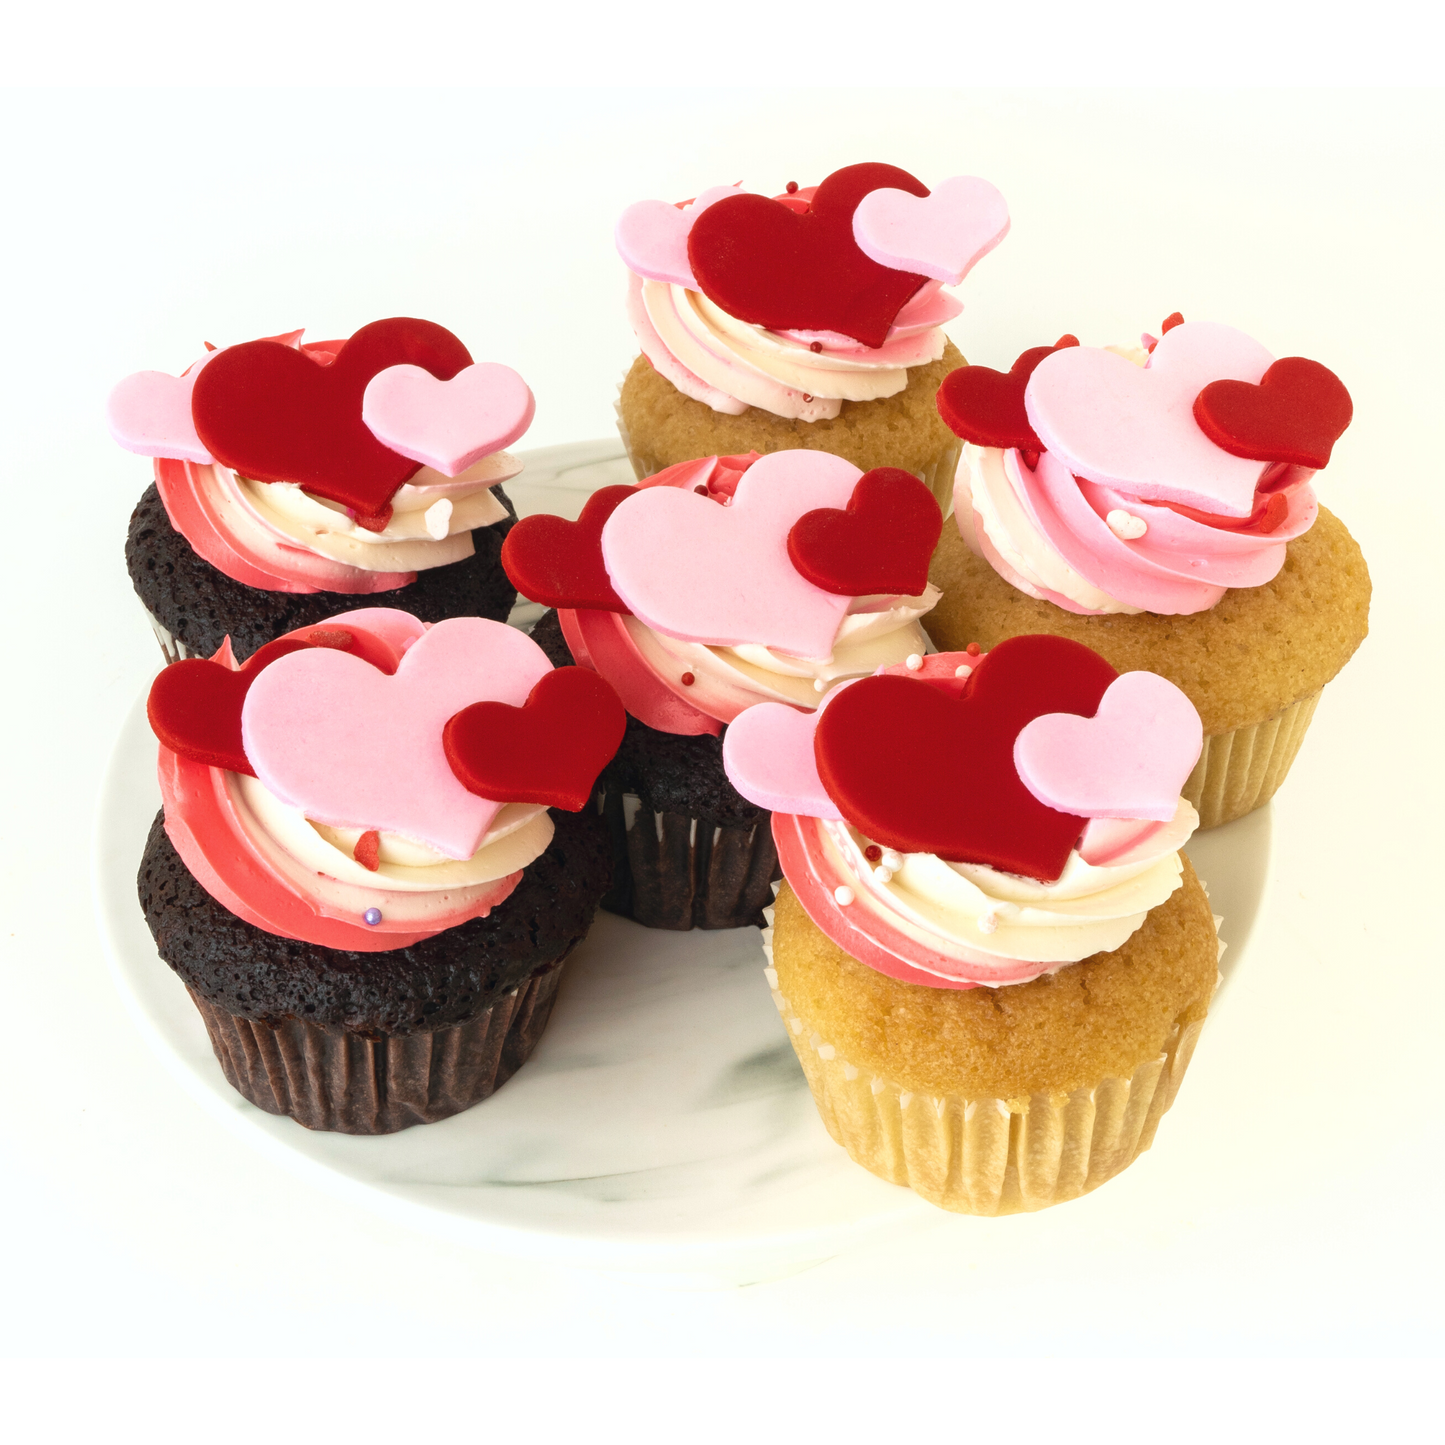 I Love You Heart Cupcakes